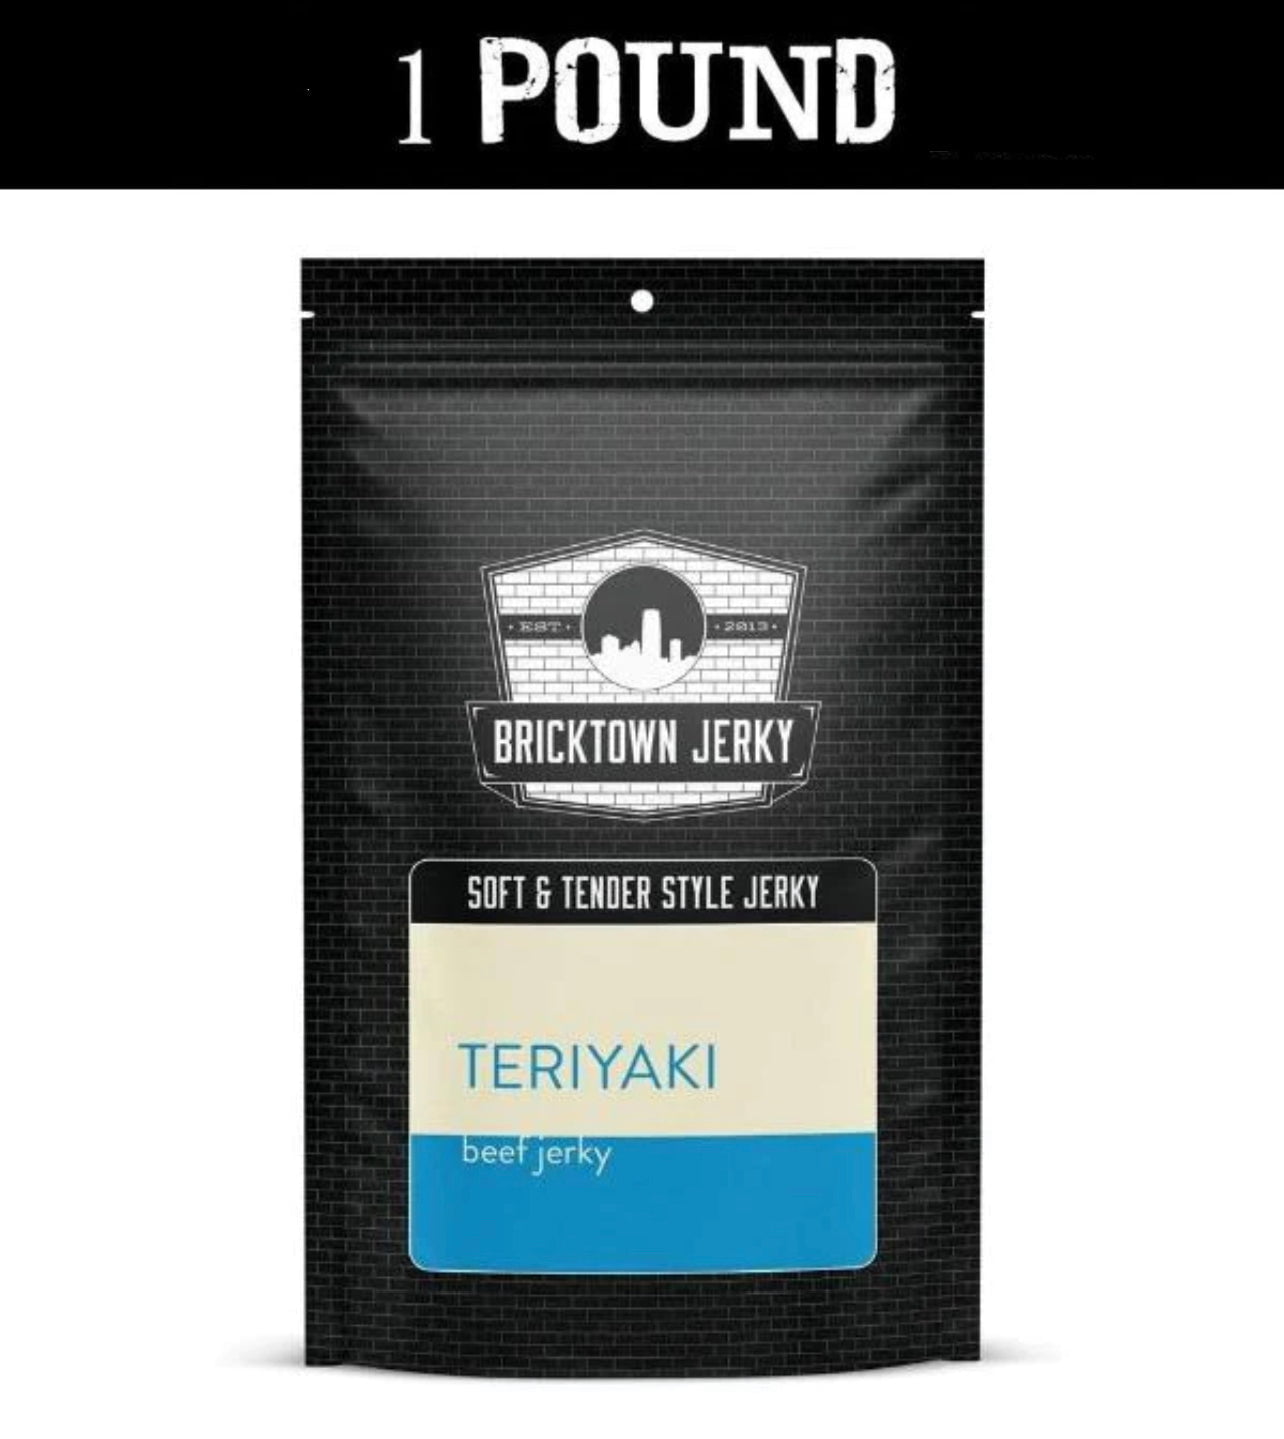 Soft and Tender Style Beef Jerky - Teriyaki - 1 Pound by Bricktown Jerky